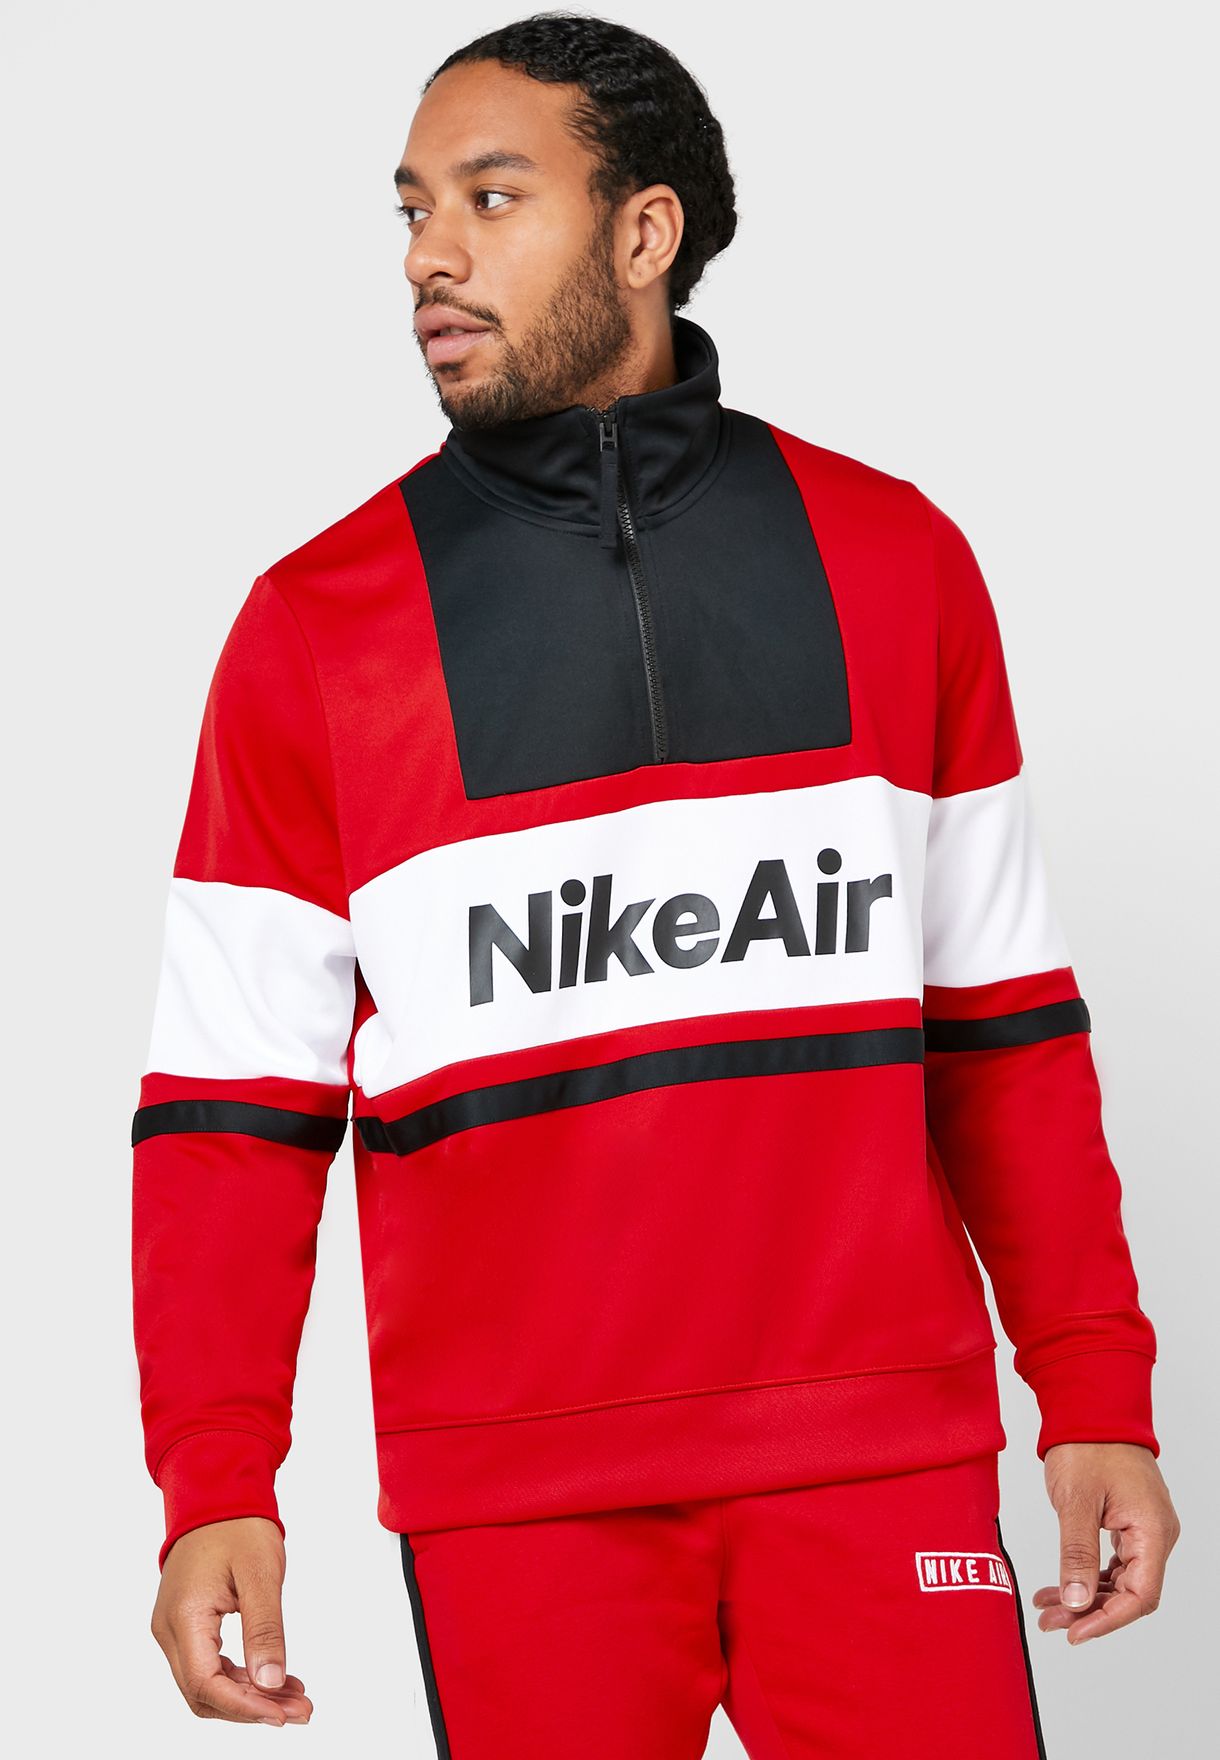 Buy > nike air track jacket > in stock